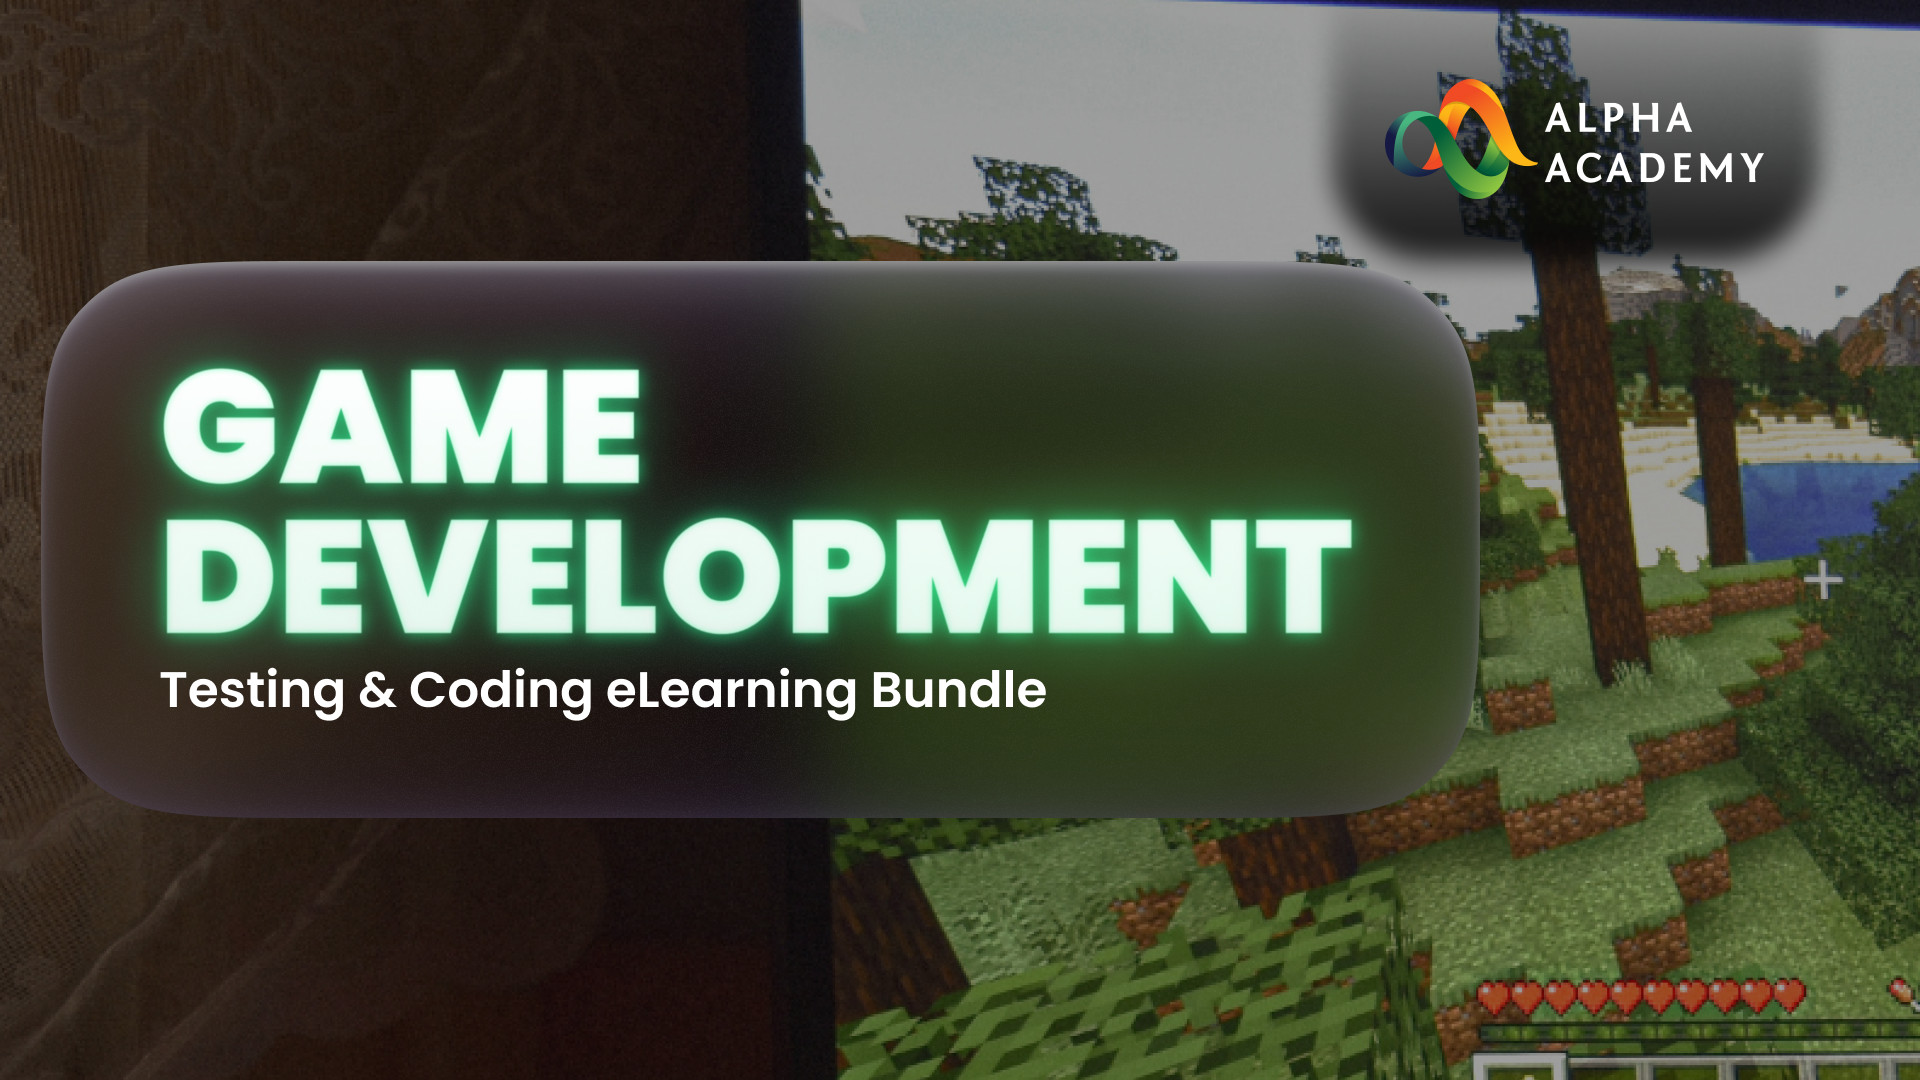 Game Development, Testing & Coding eLearning Bundle Alpha Academy Code [USD 10.19]